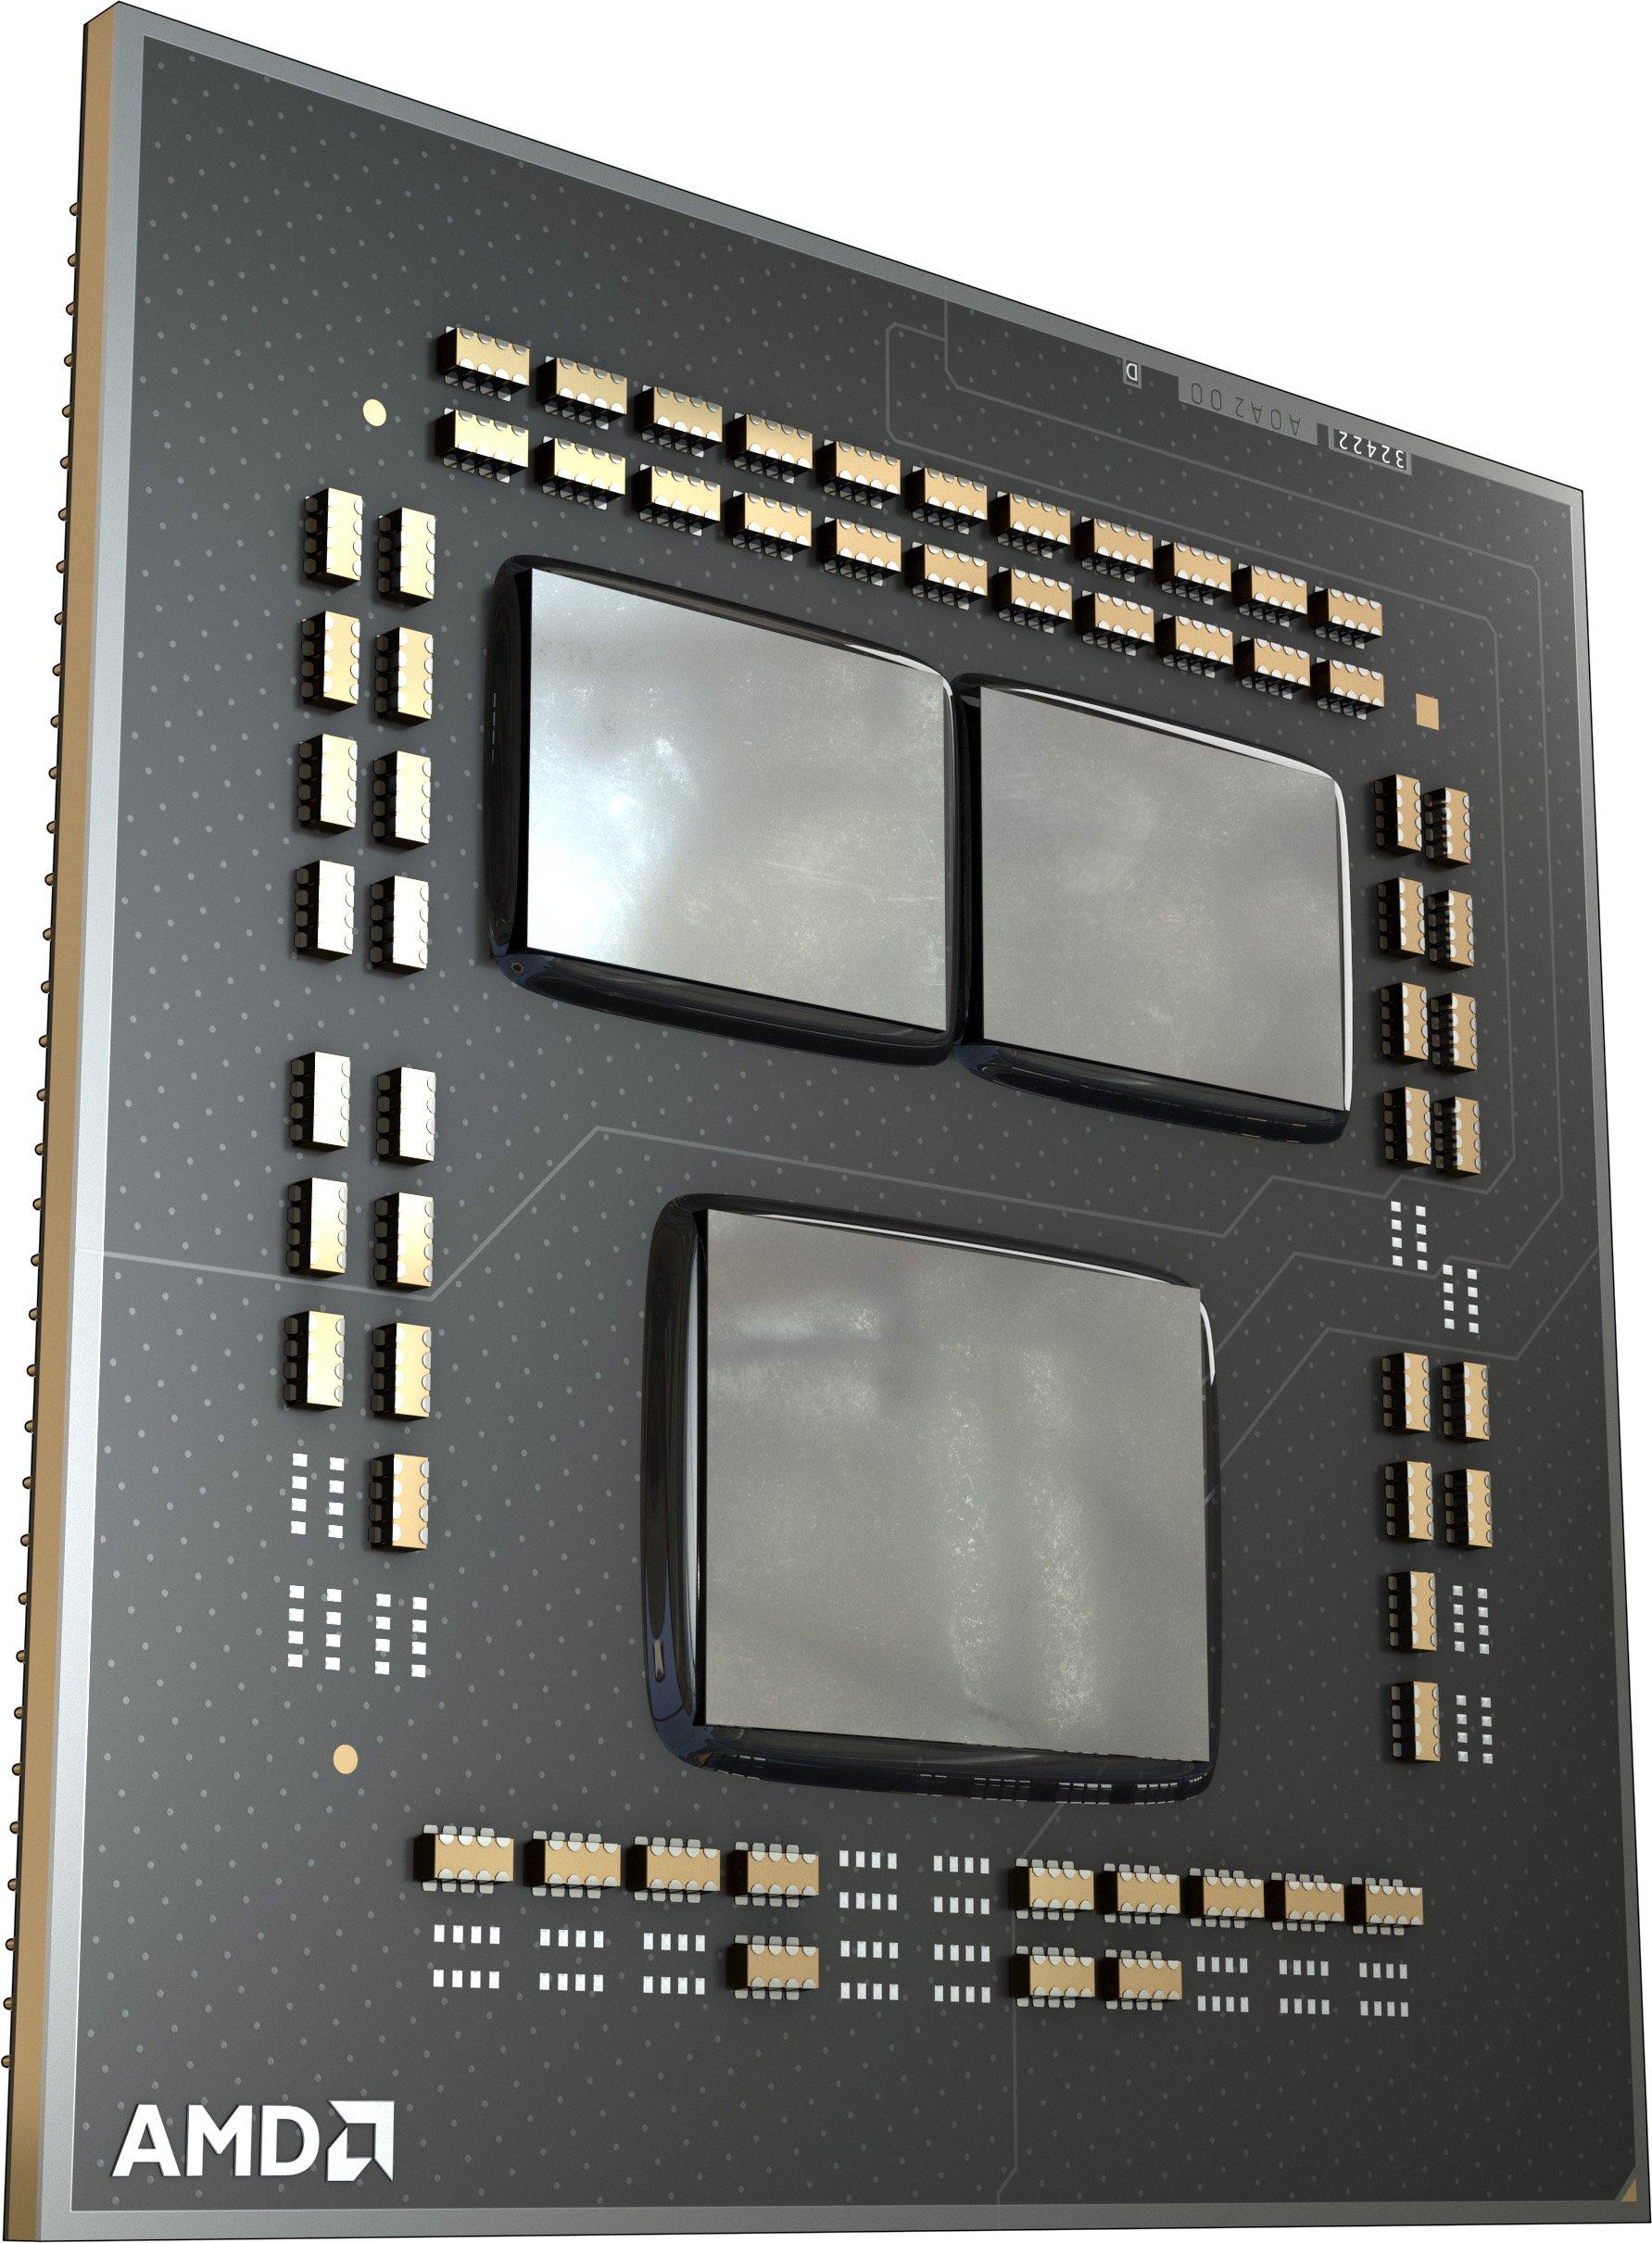 AMD Ryzen 9 5900X Processor Review 